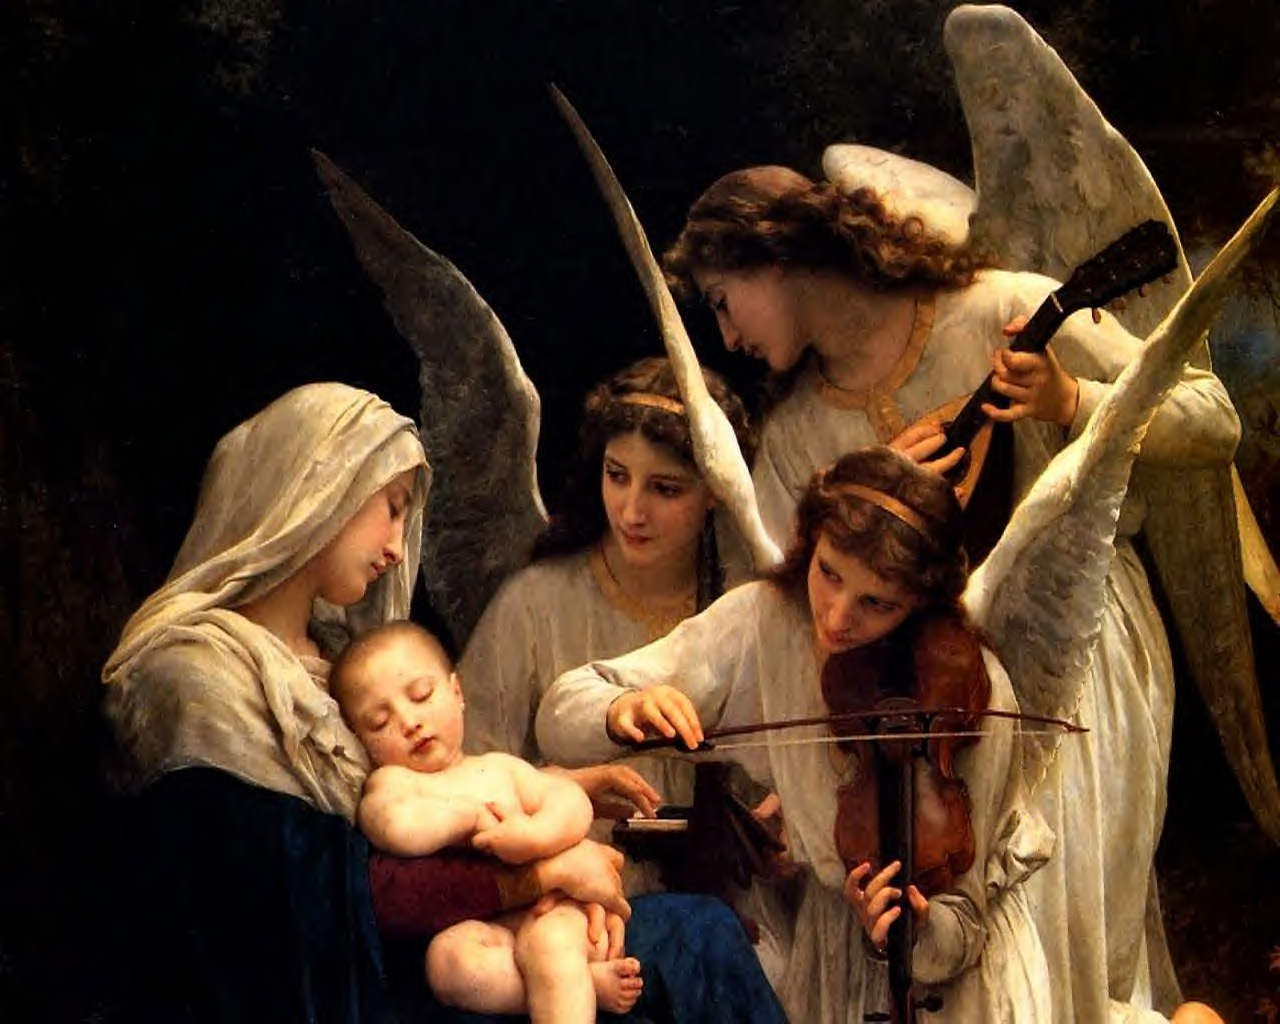 http://4.bp.blogspot.com/-RURH2PZwihY/Th4Sjs9UH7I/AAAAAAAAAVQ/DsD8917qlYQ/s1600/Blessed-Virgin-Mary-Virgin-with-angels.jpg